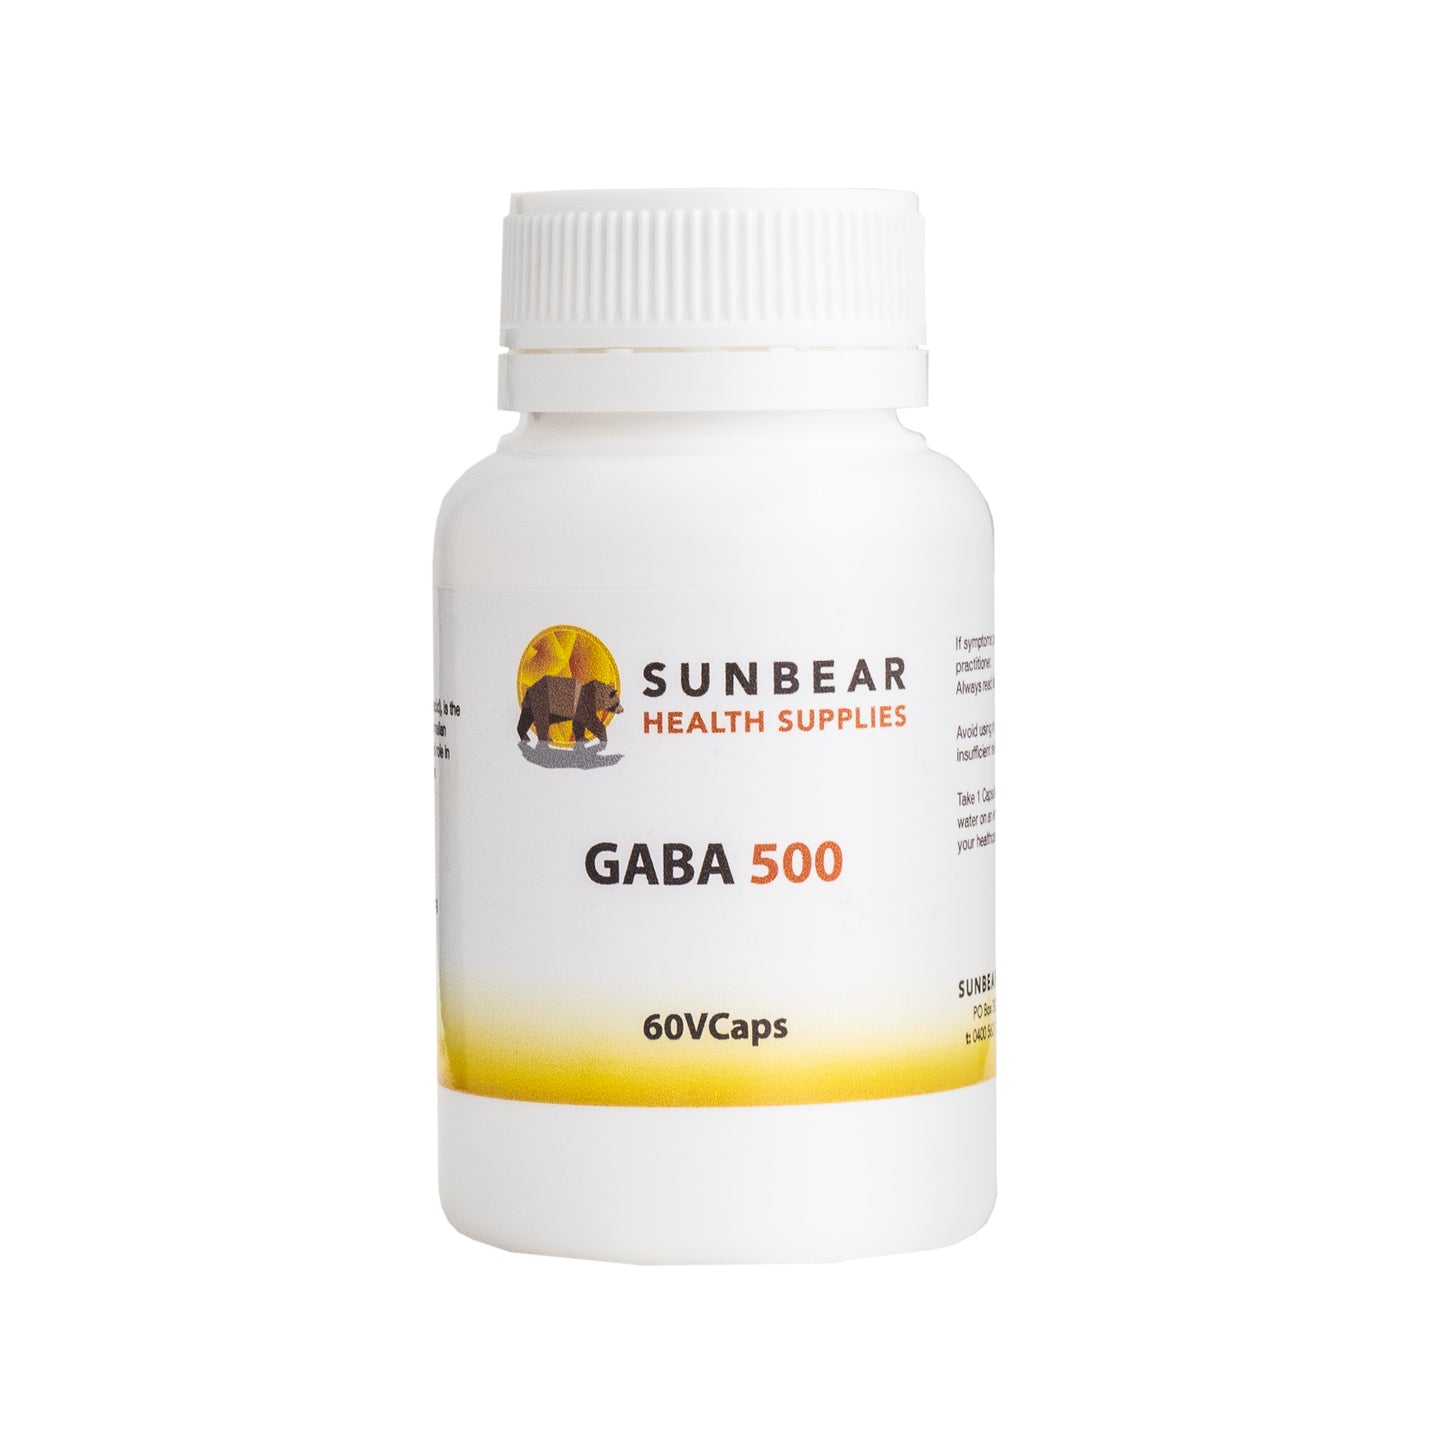 GABA 500 - 60VCaps - Sunbear Health Supplies